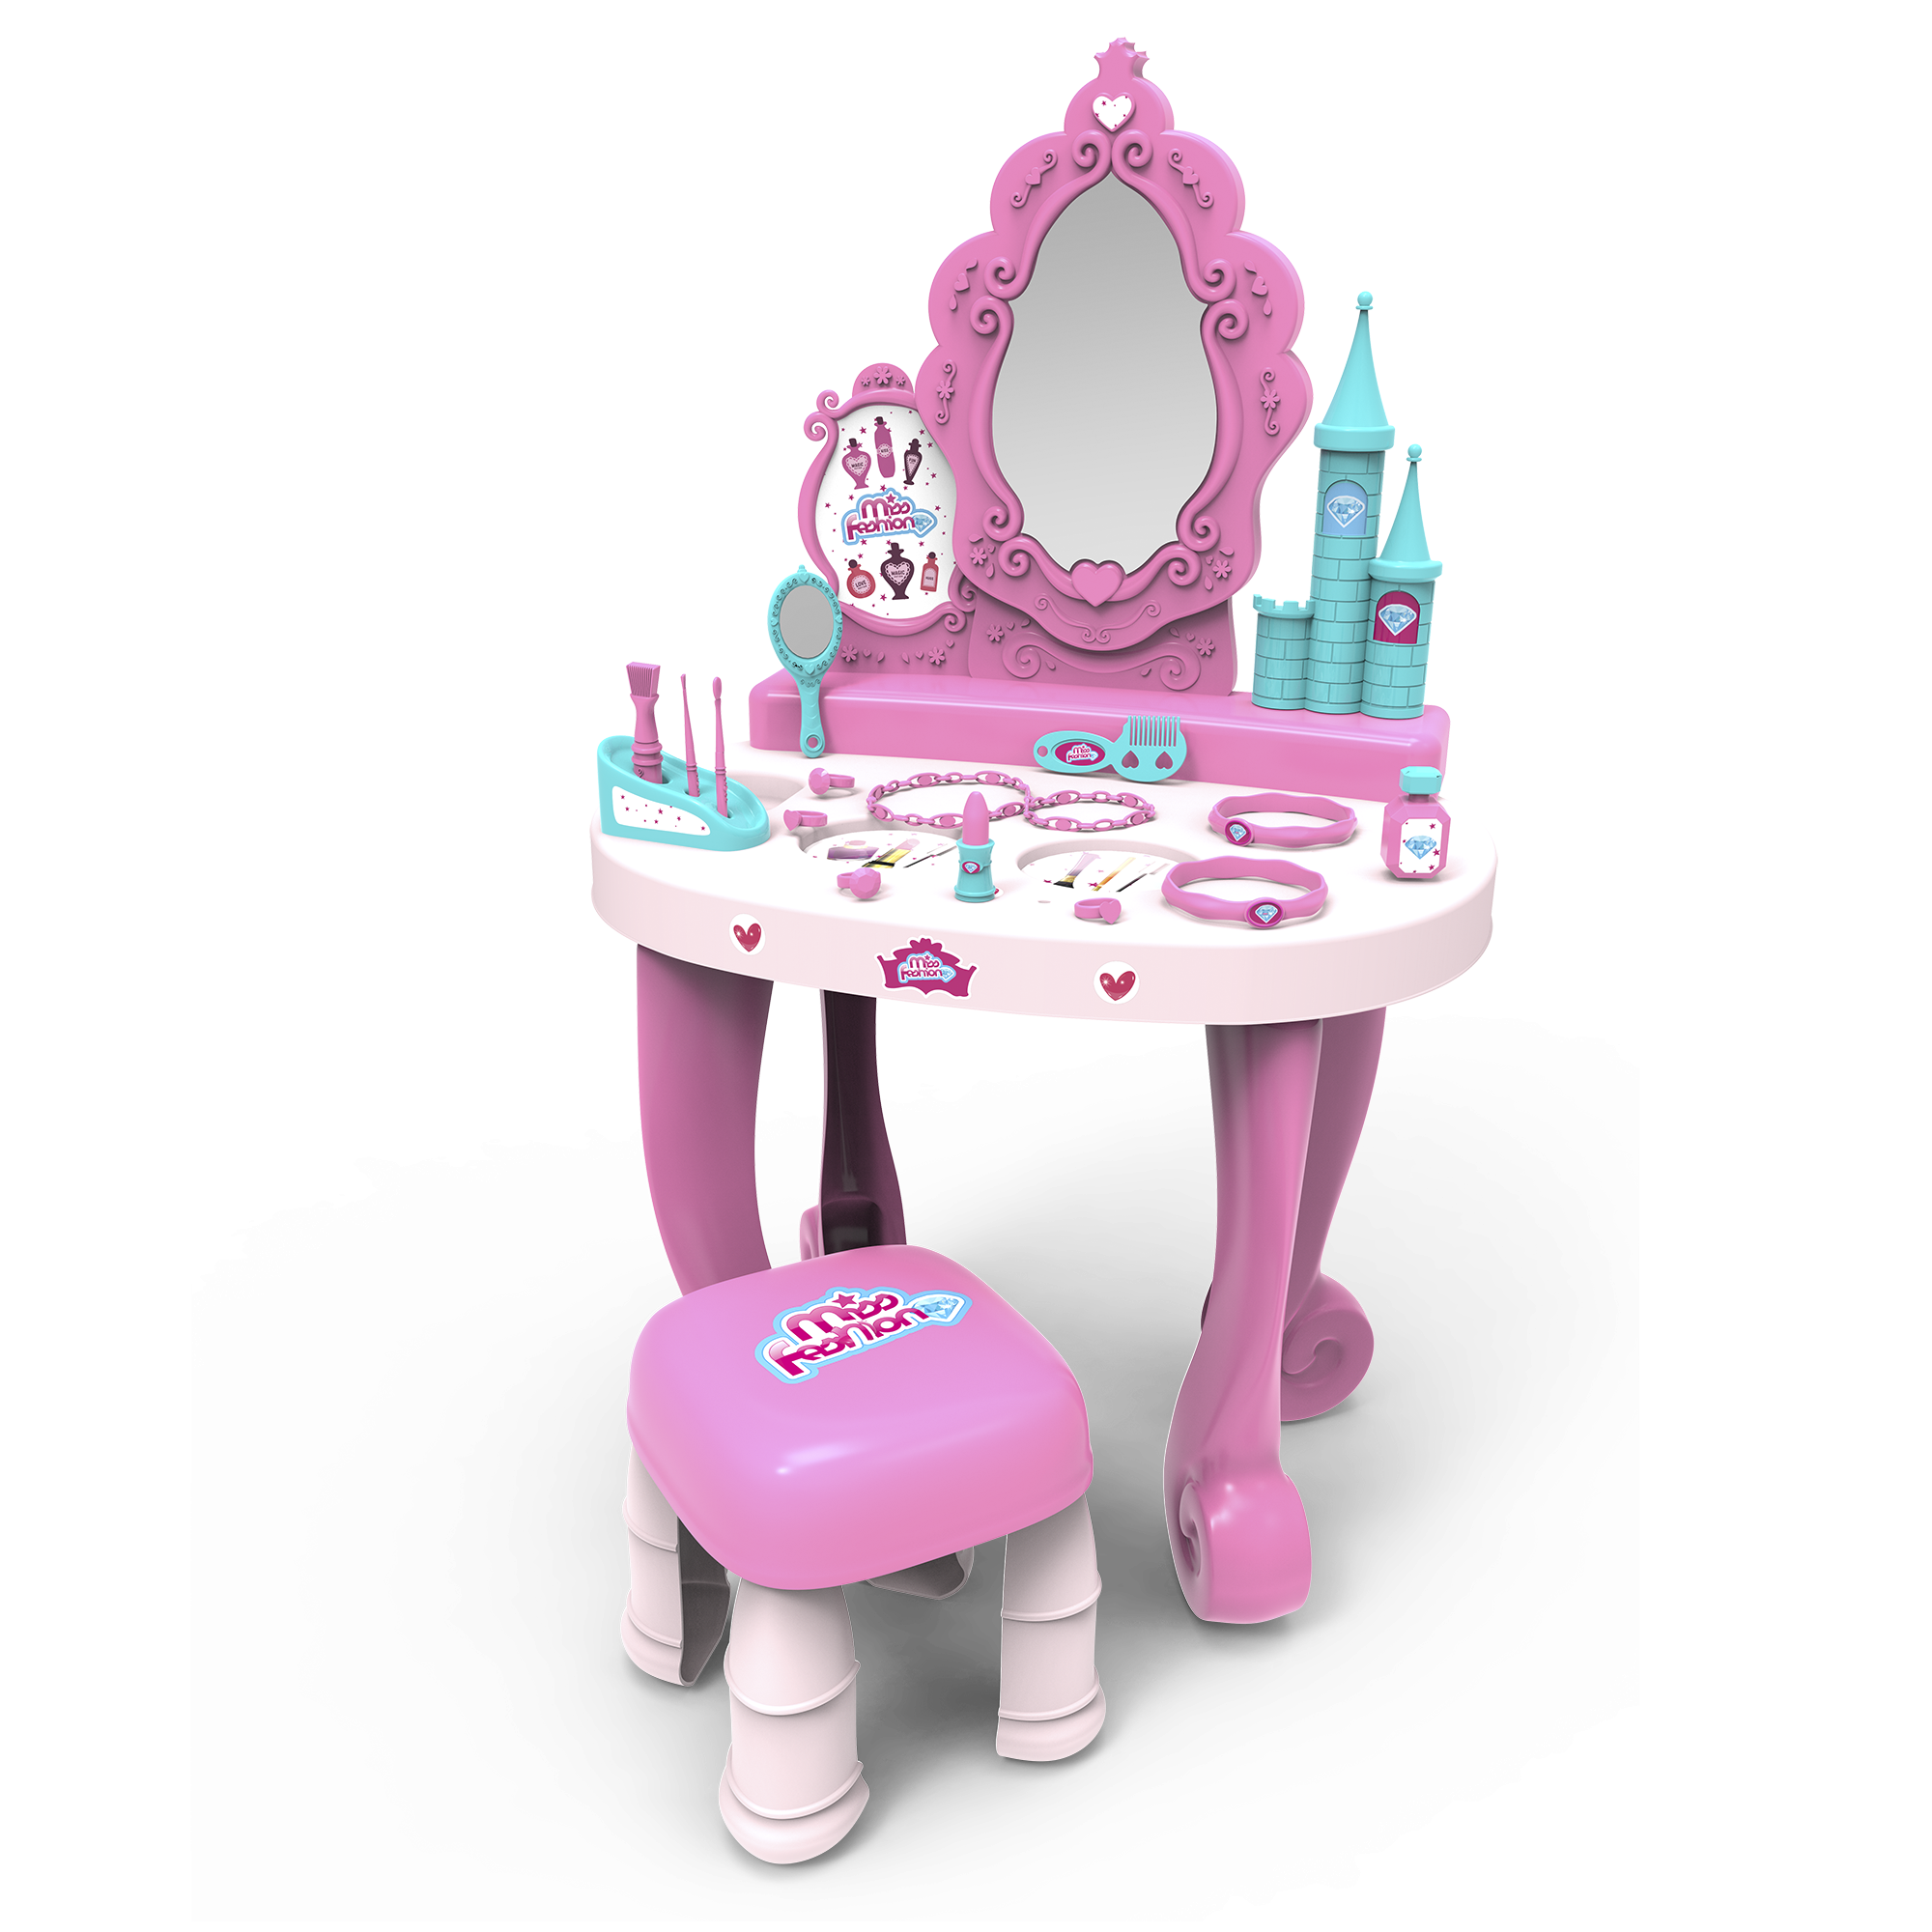 Specchiera vanity table - Toys Center